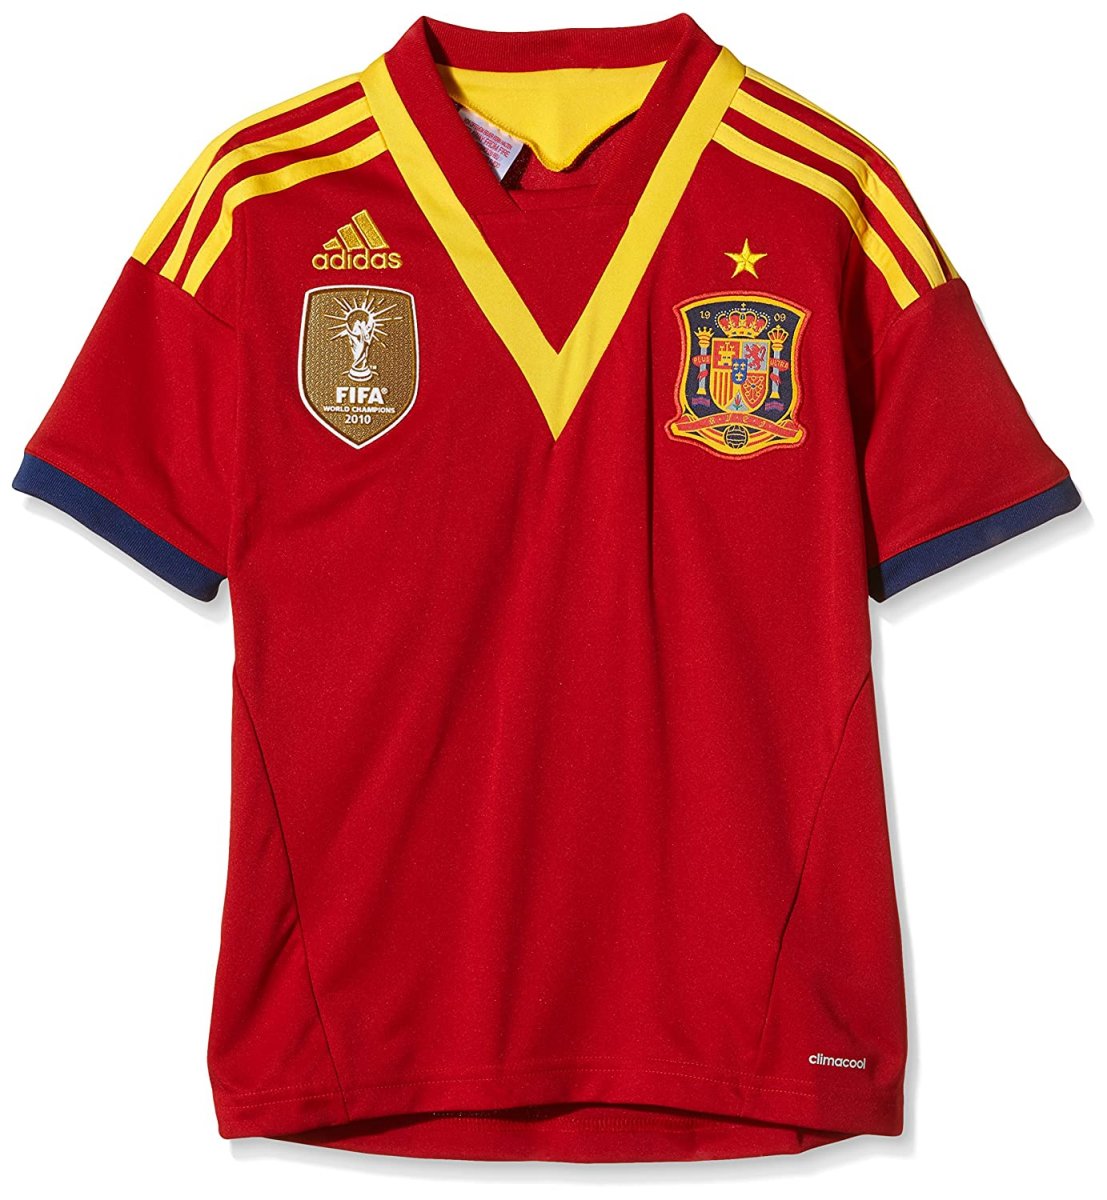 Spain Football clothes